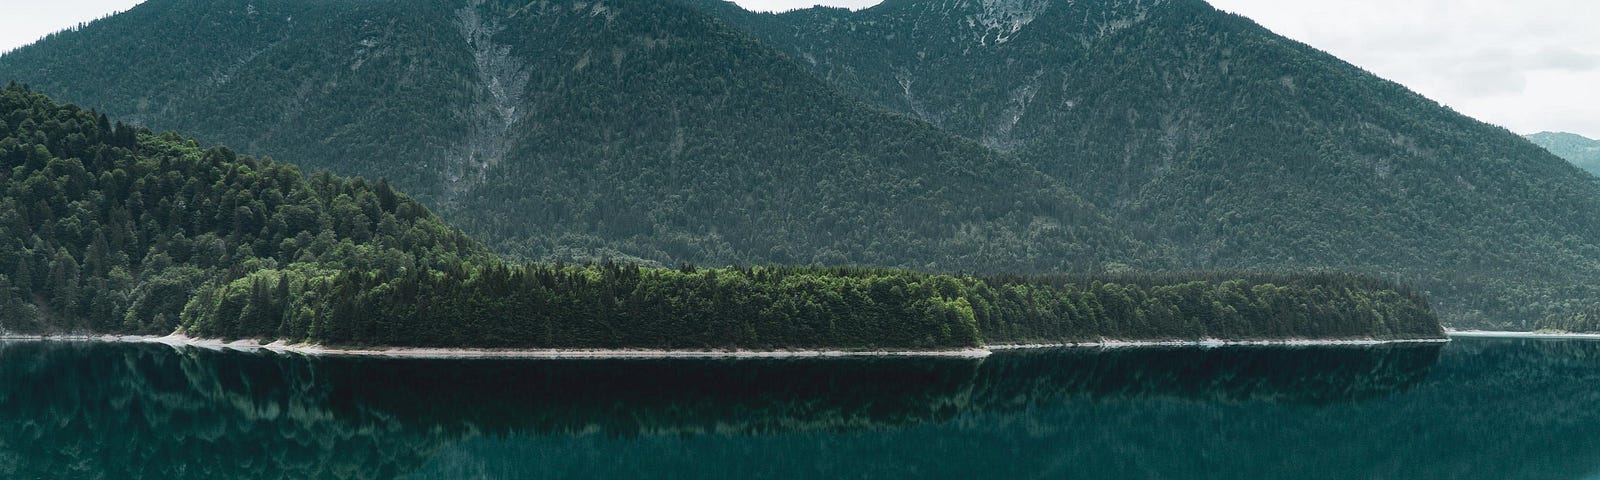 Mountain reflection on a lake